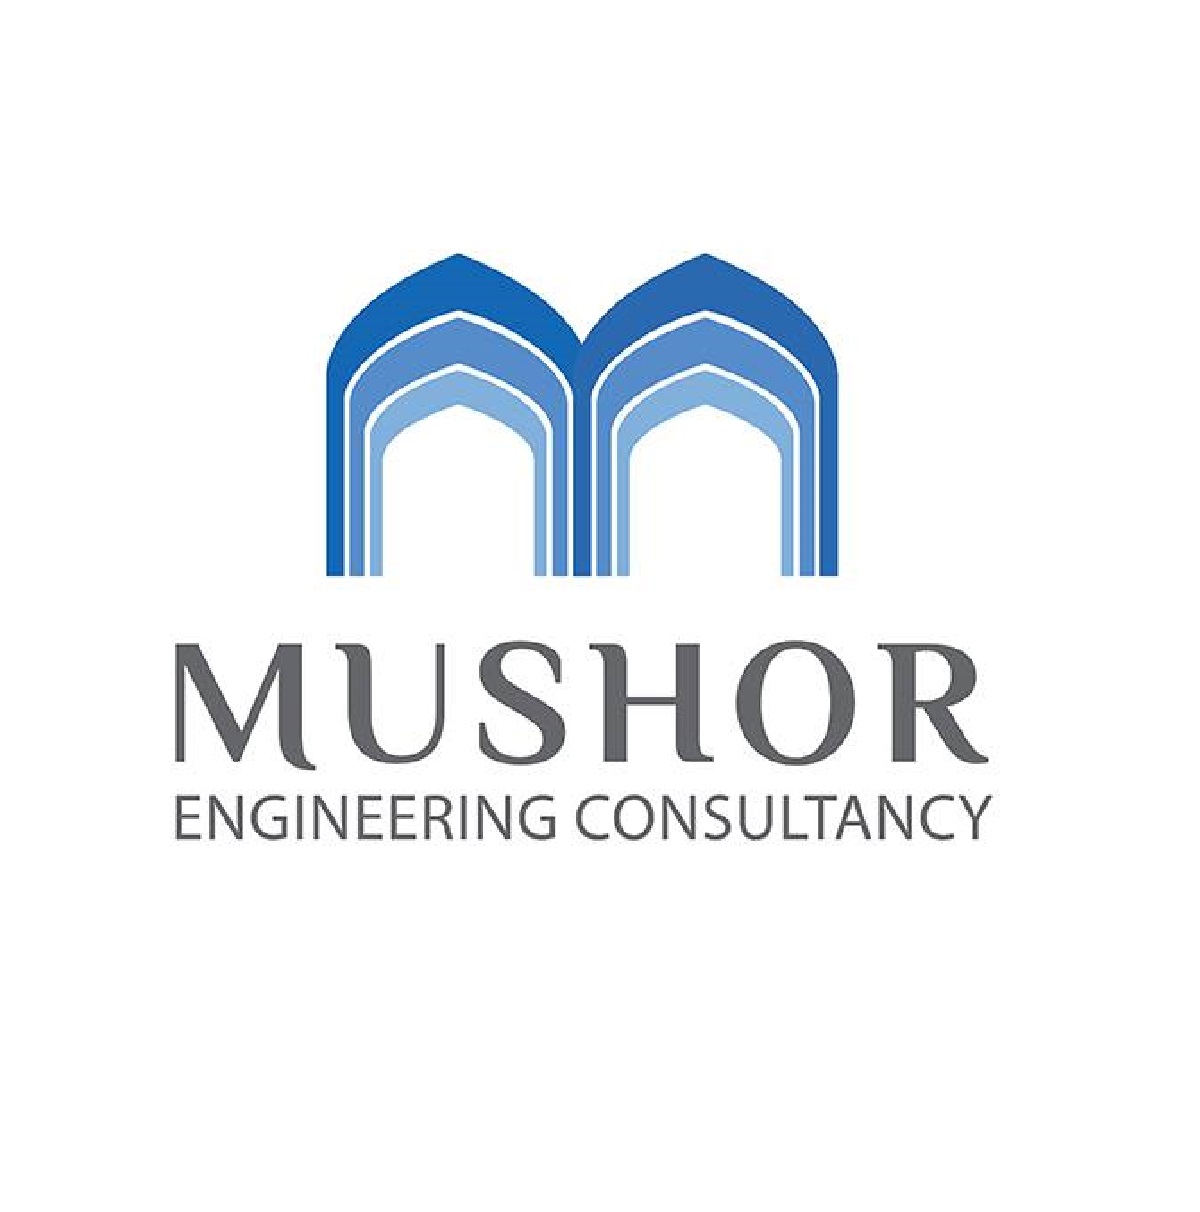 MUSHOR for Engineering